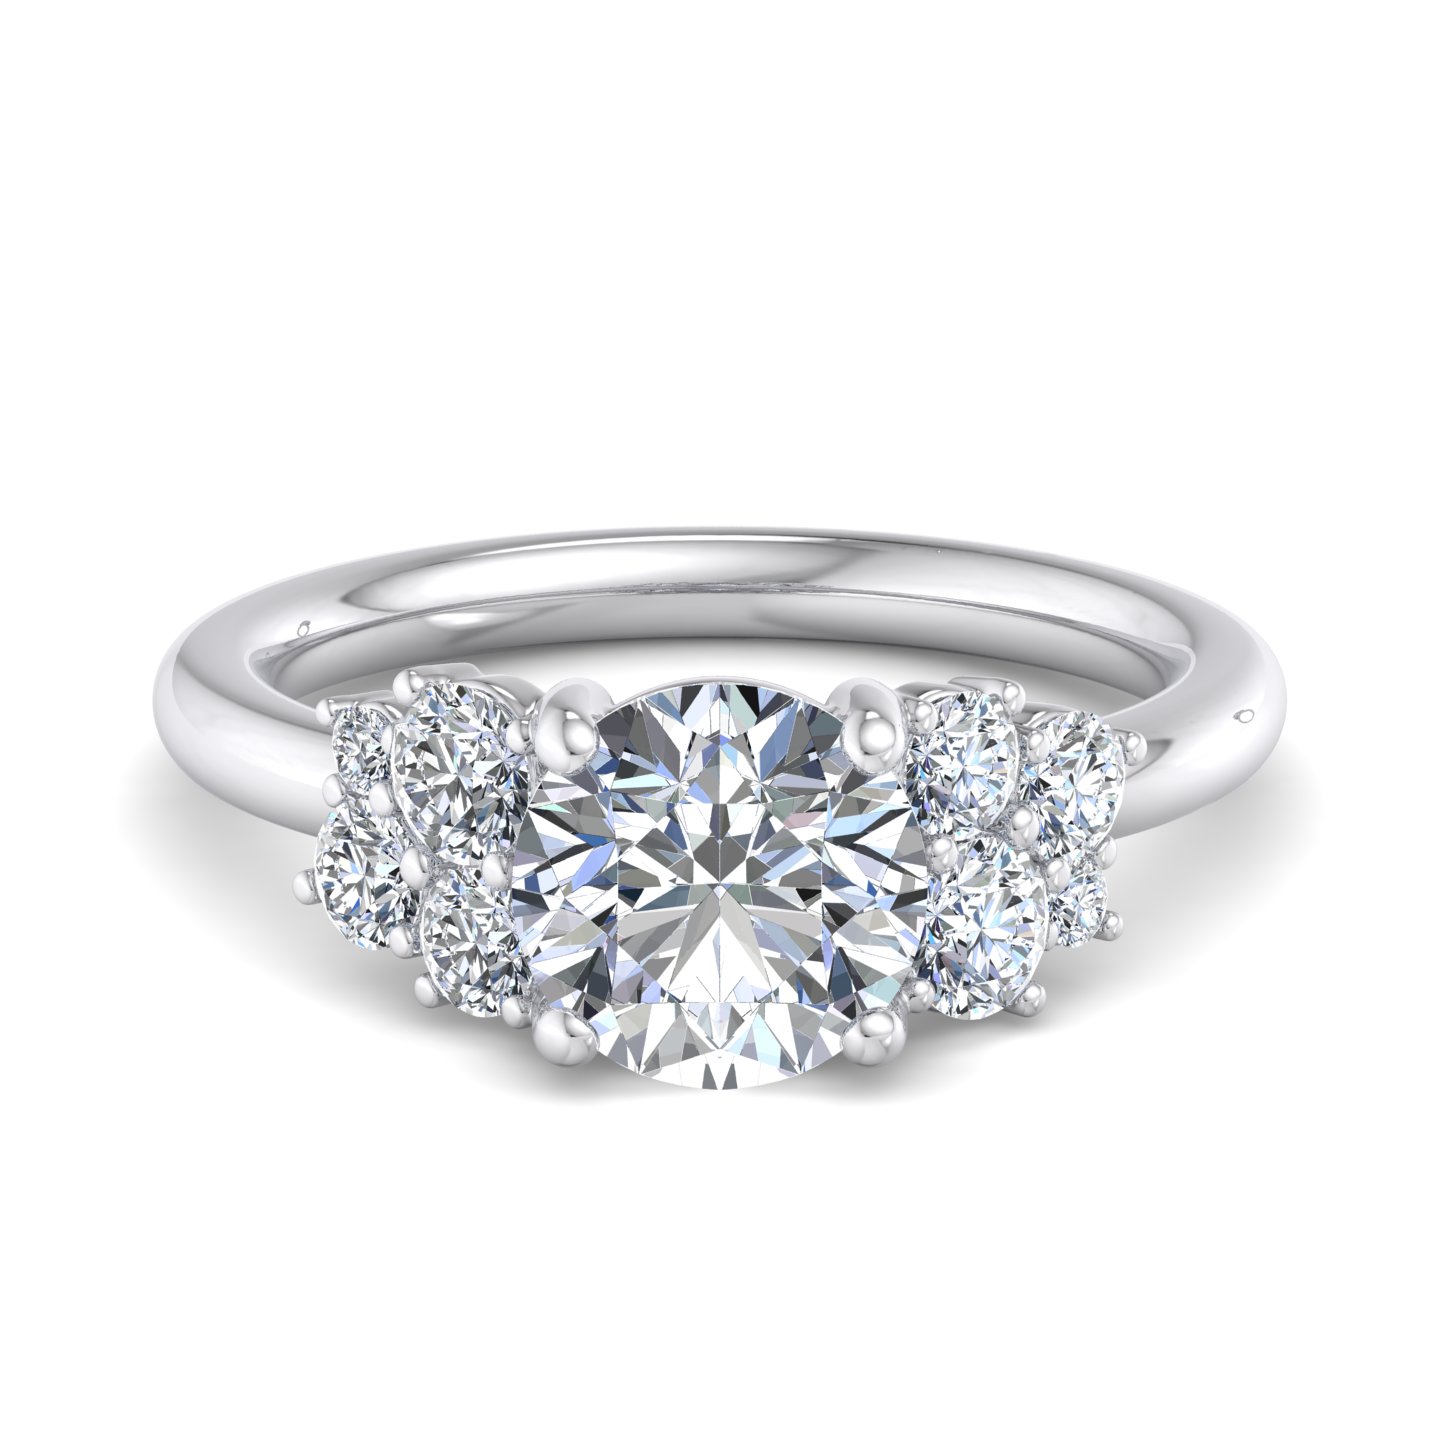 Sarah Diamond Engagement ring